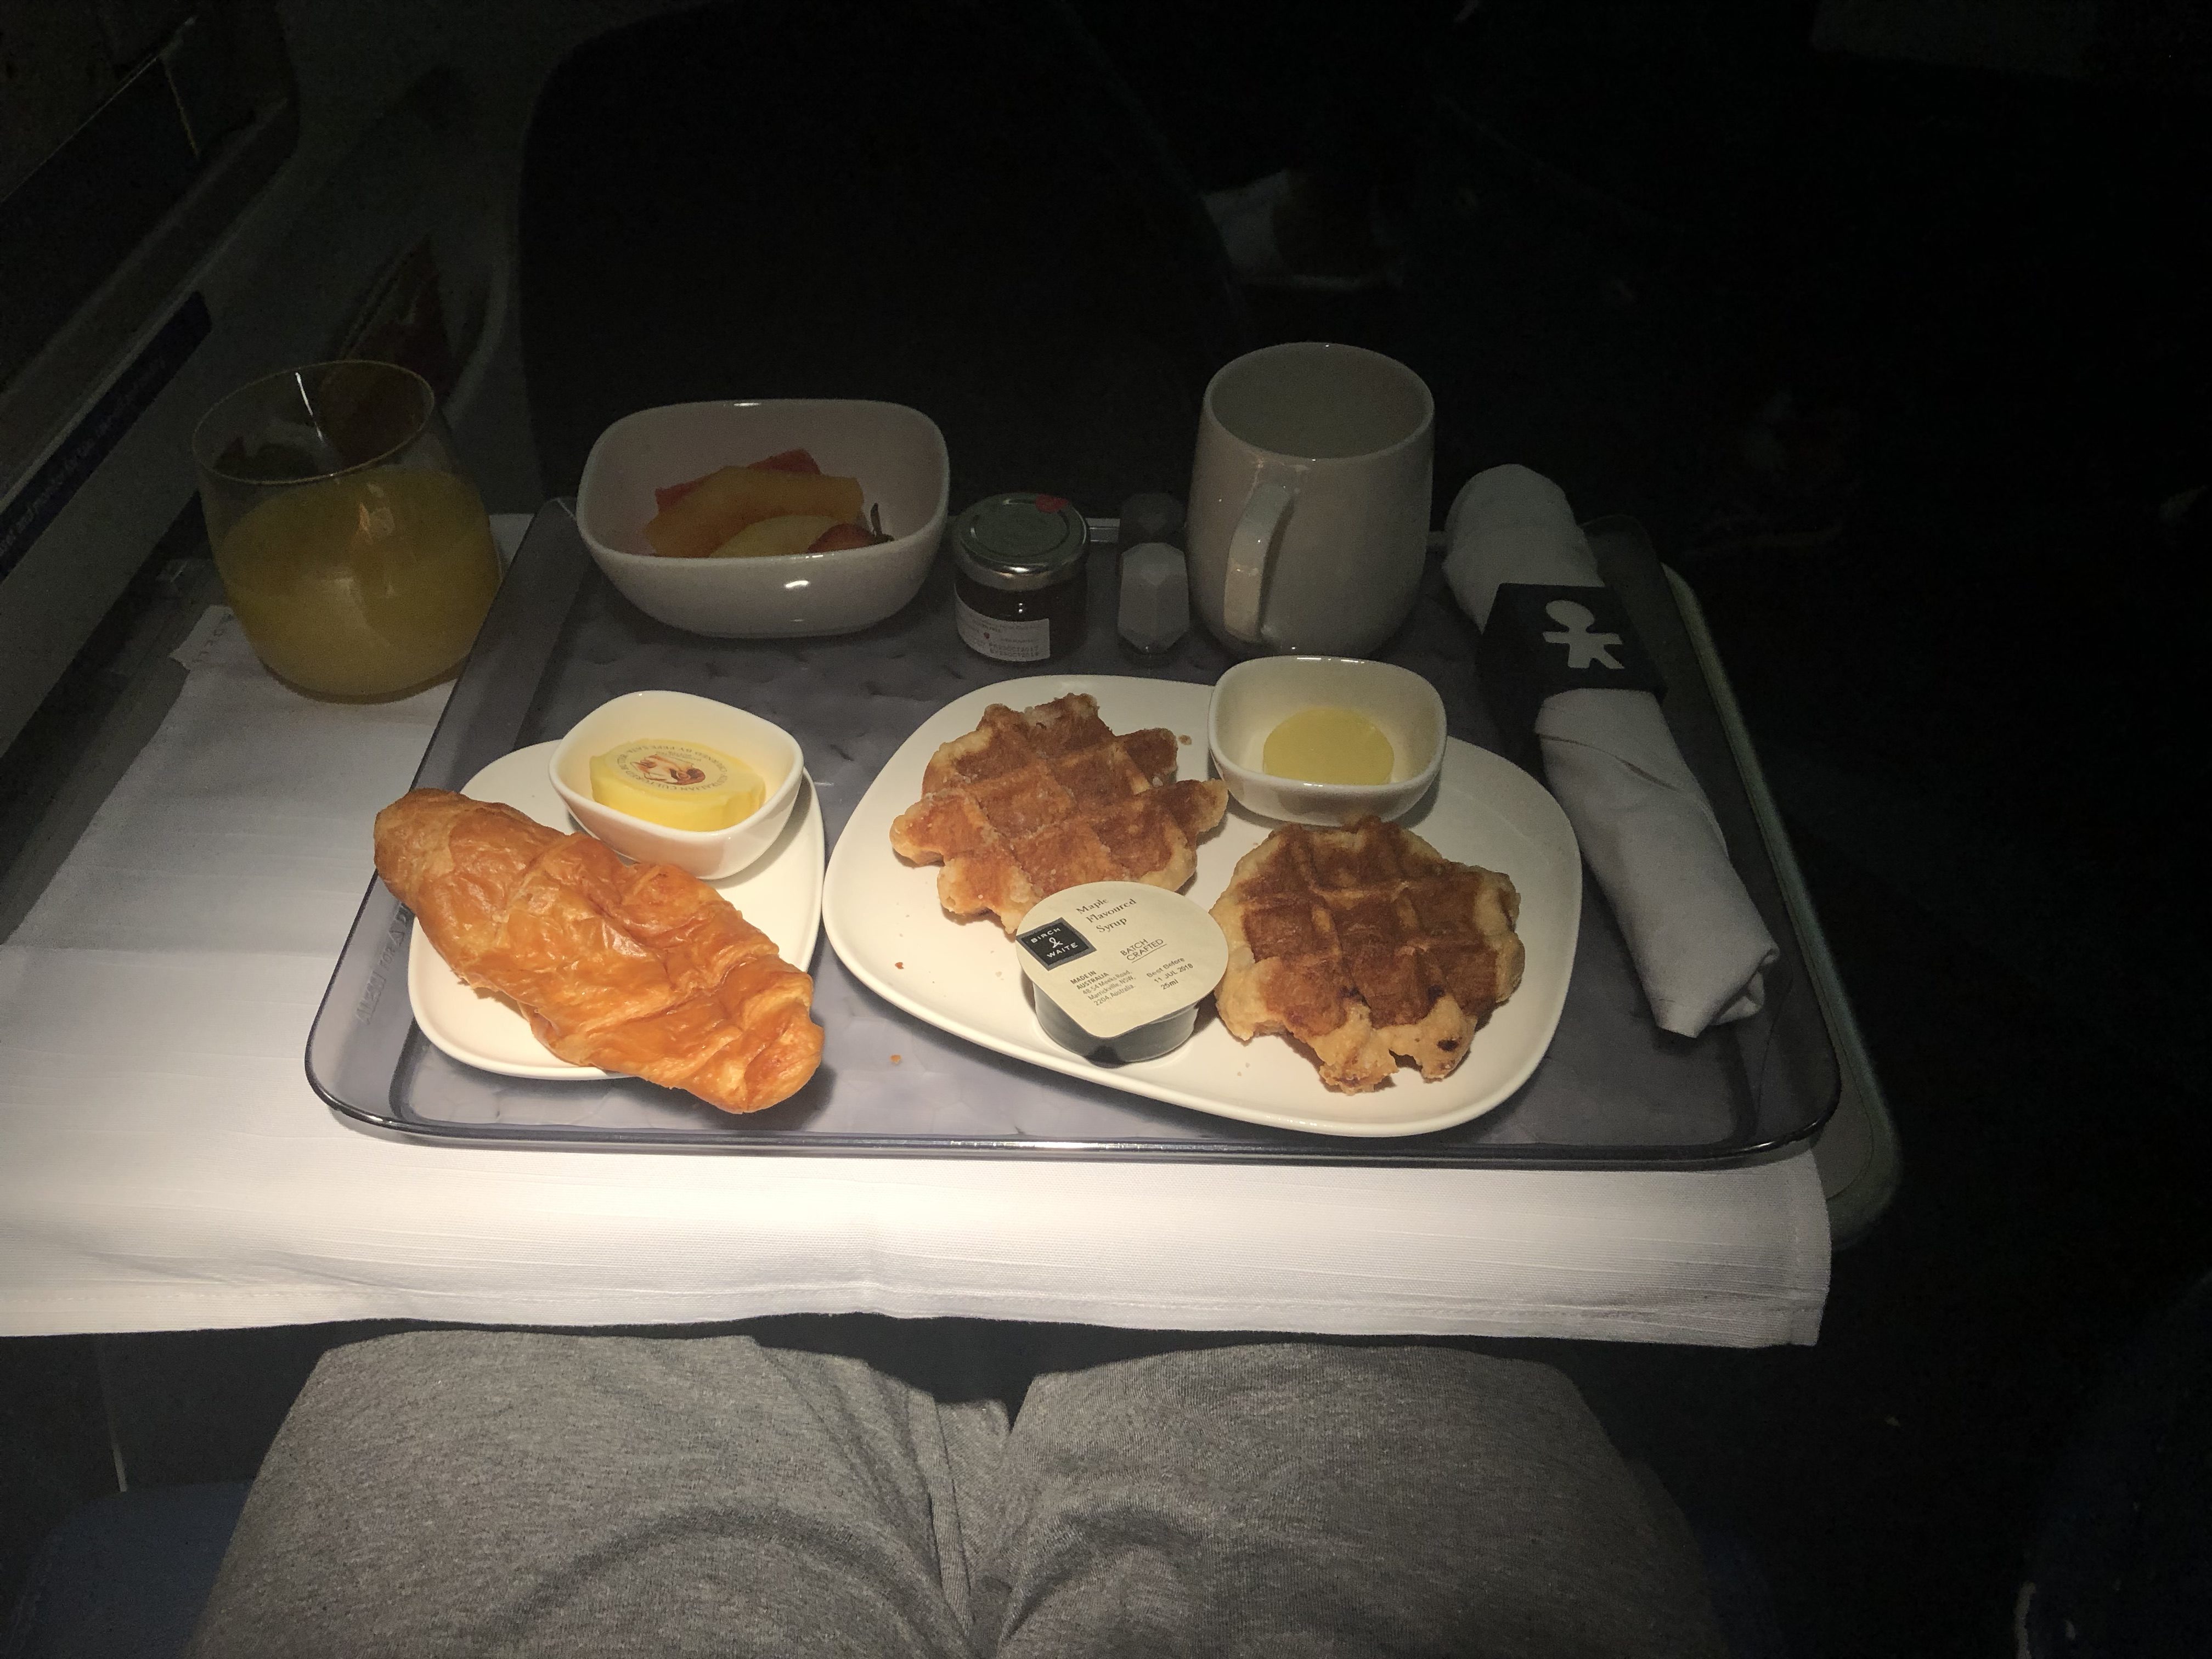 Delta One breakfast, Sydney to Los Angeles